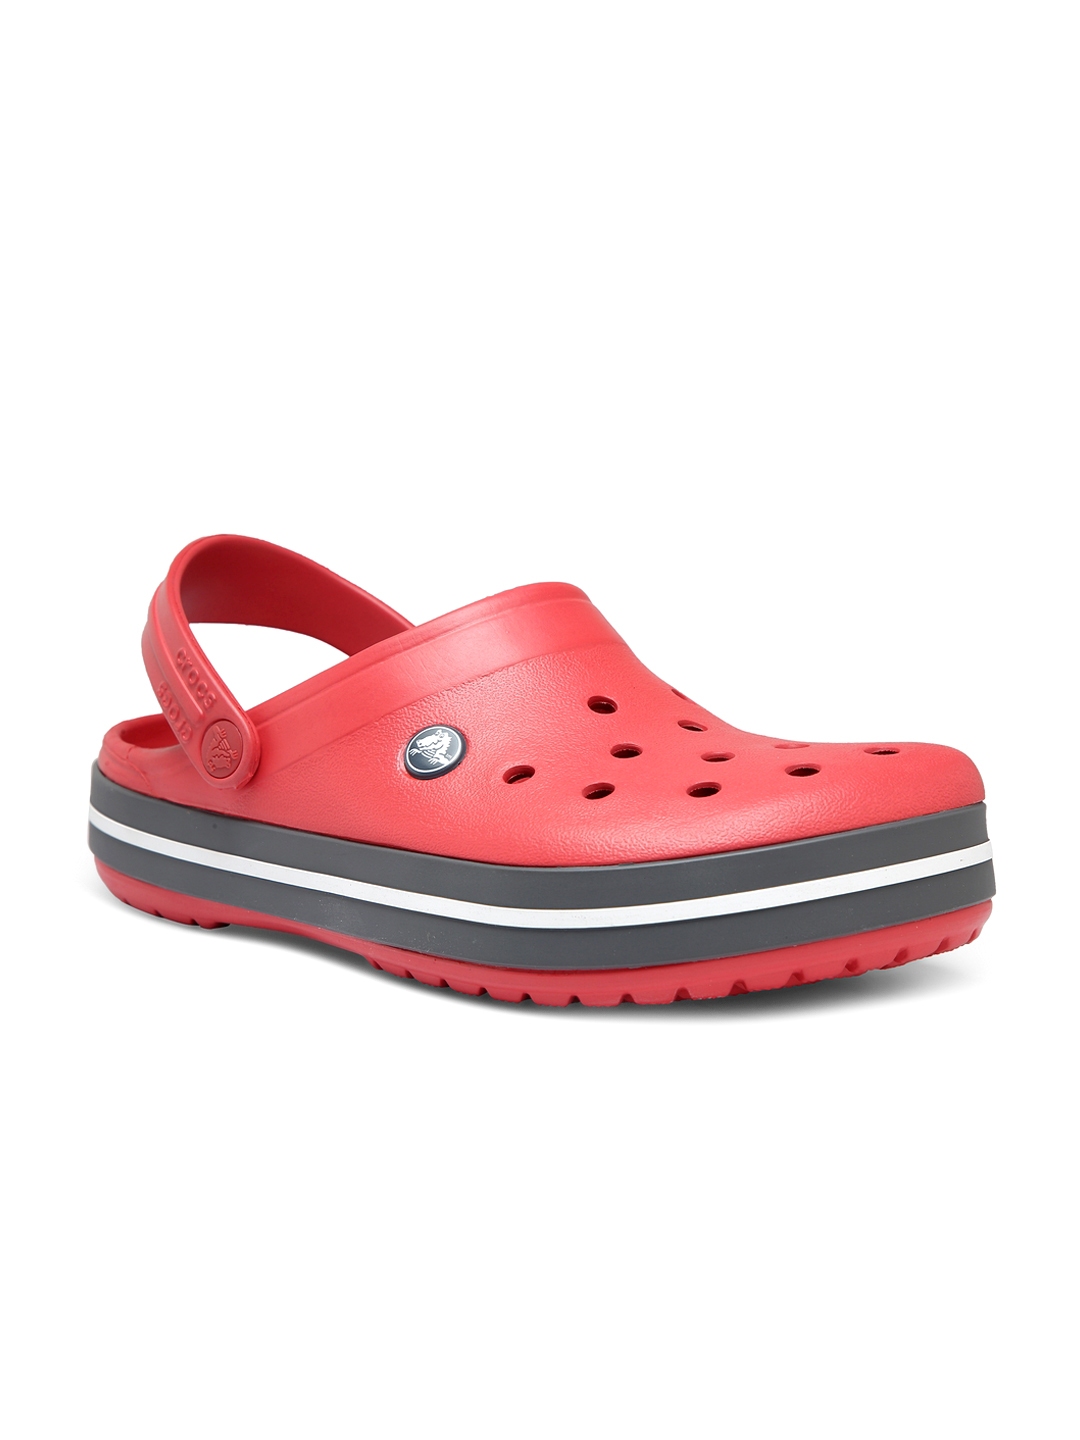 Buy Crocs Men Red & Grey Clogs - Sandals for Men 7178346 | Myntra